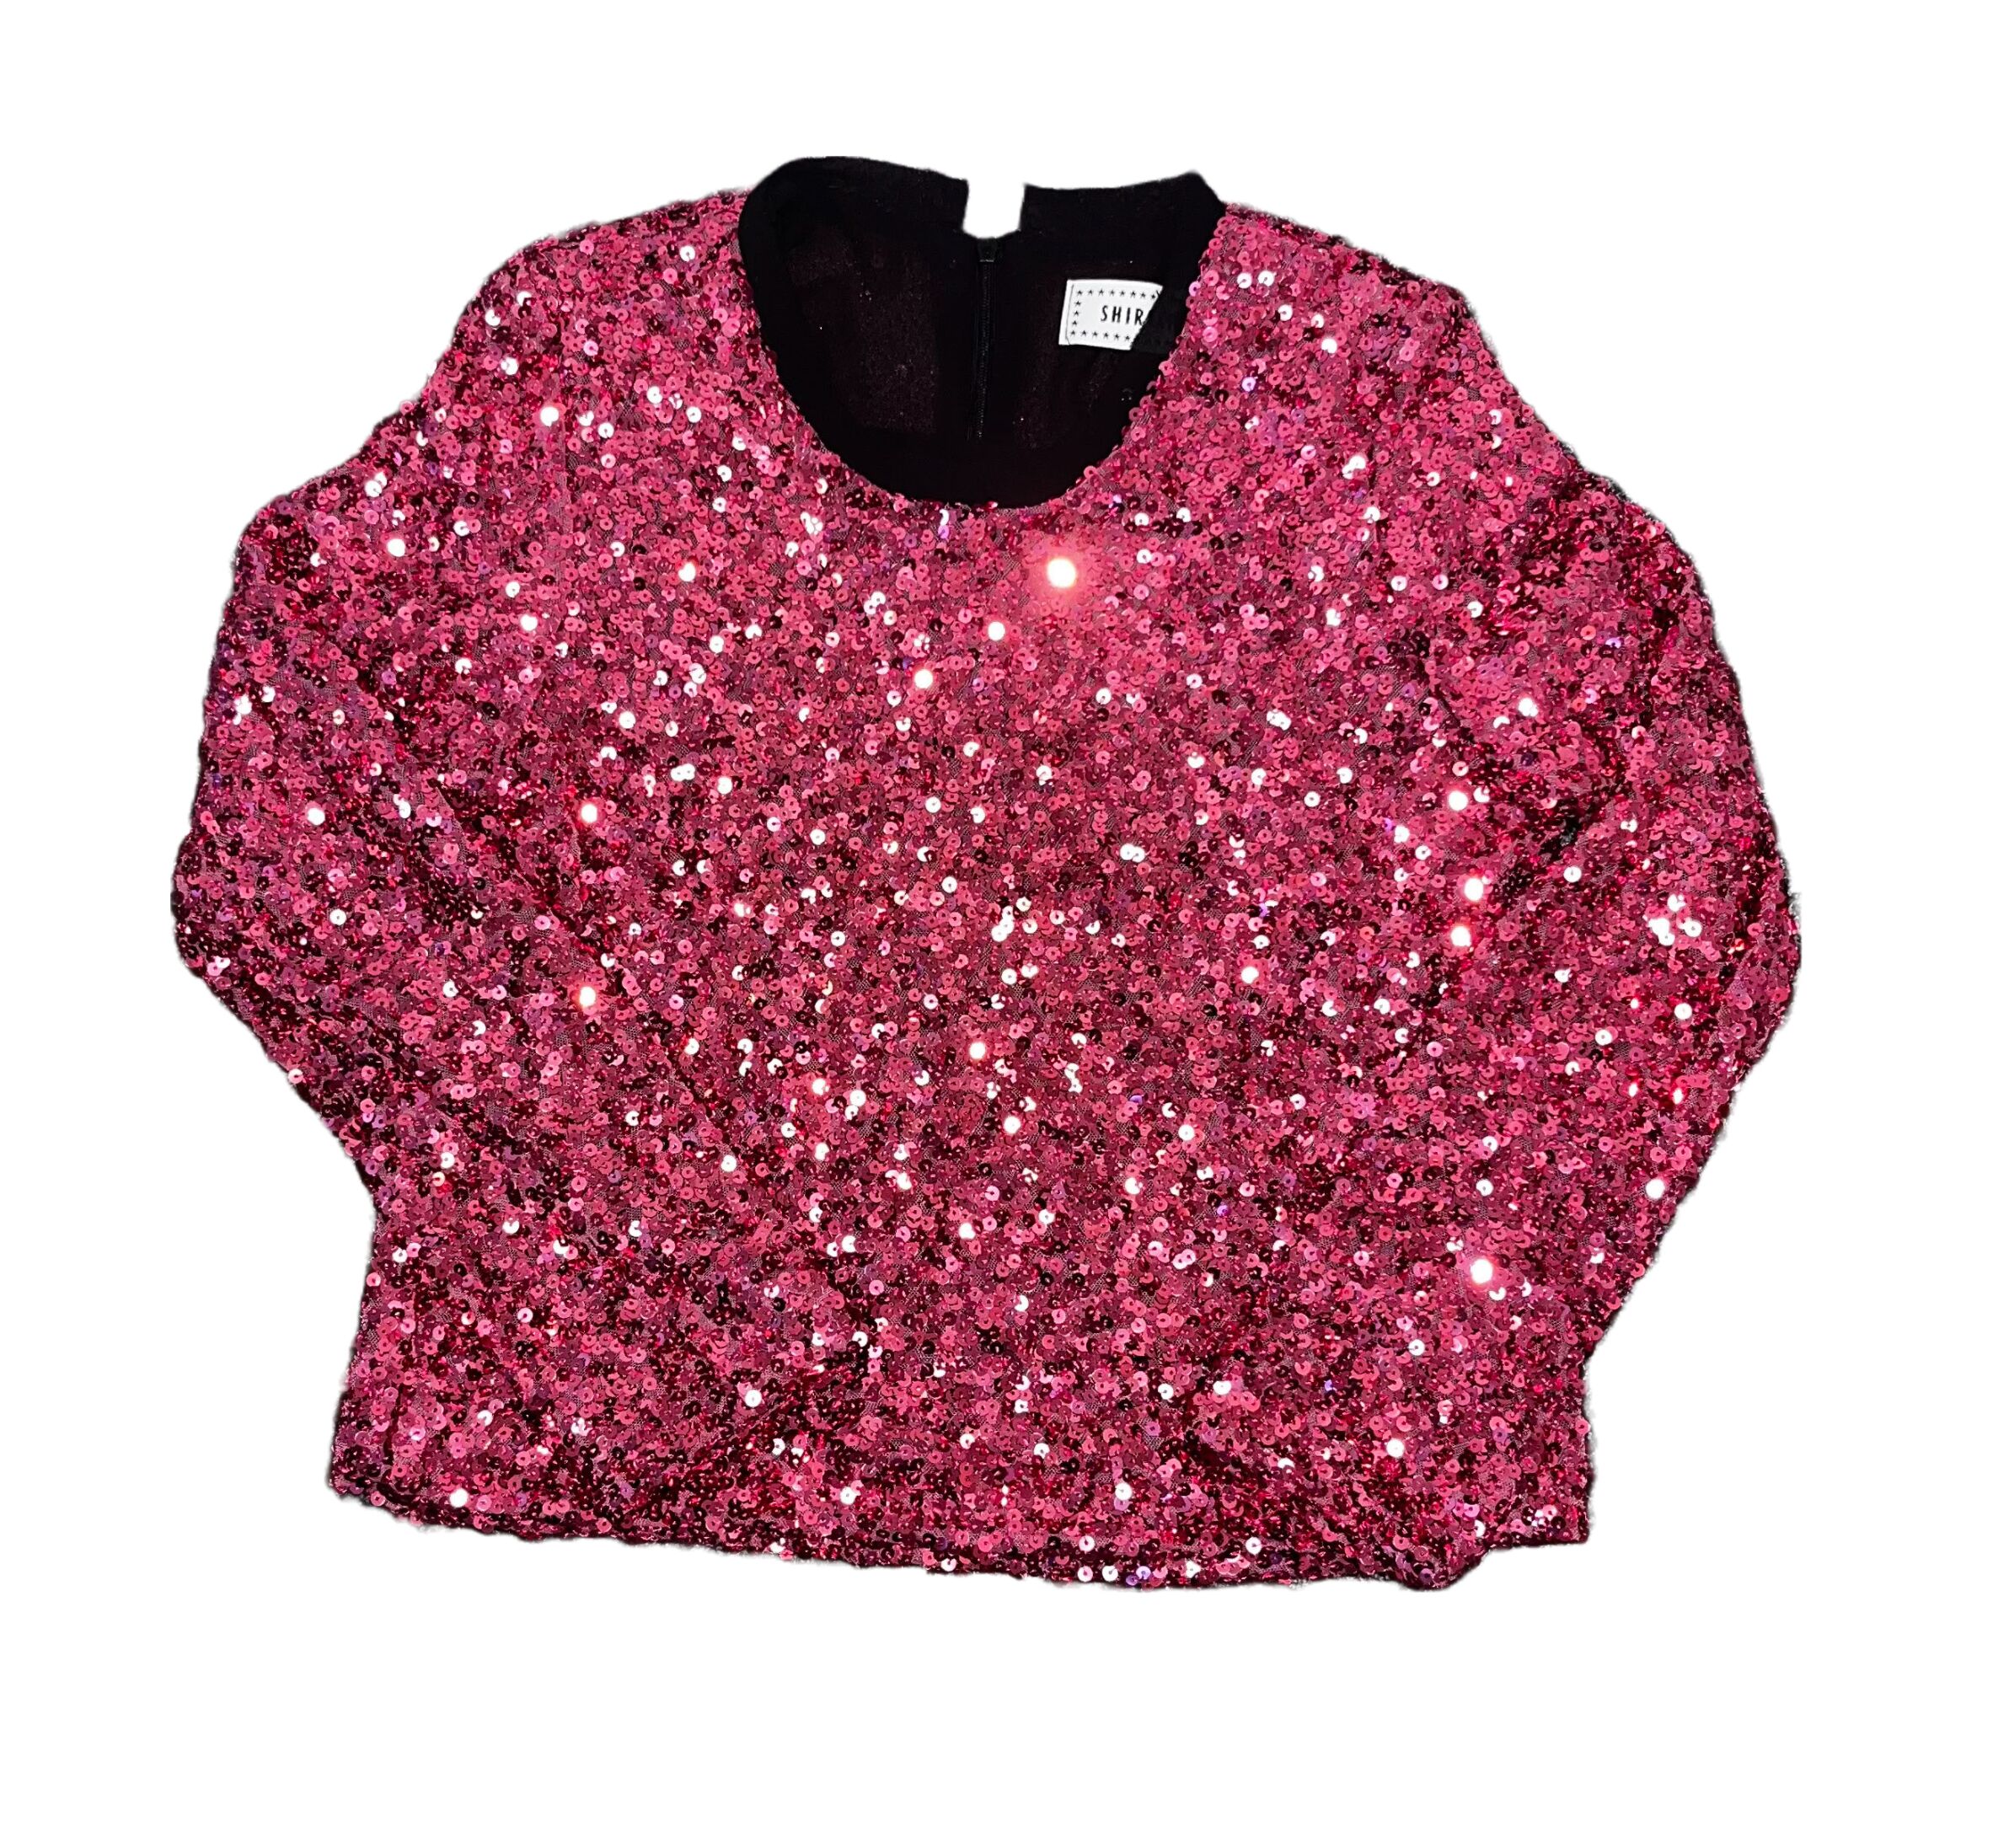 Shirtaporter Hemd Bluse Paillette Pink